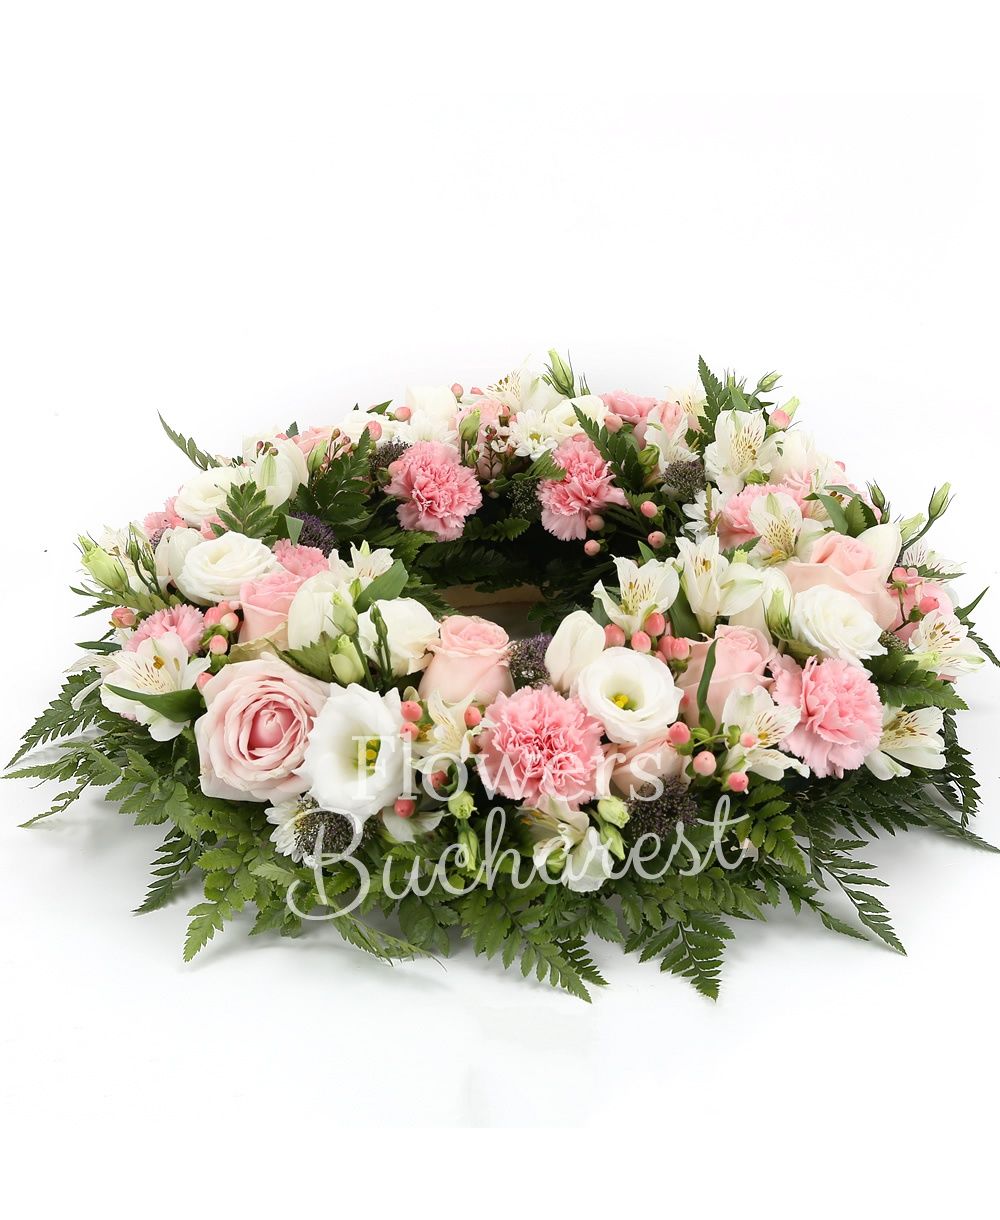 10 pink roses, 15 pink carnations, 5 white alstroemeria, 10 white lisianthus, 10 pink hypericum, 10 white tulips, 10 mauve trachelium, greenery